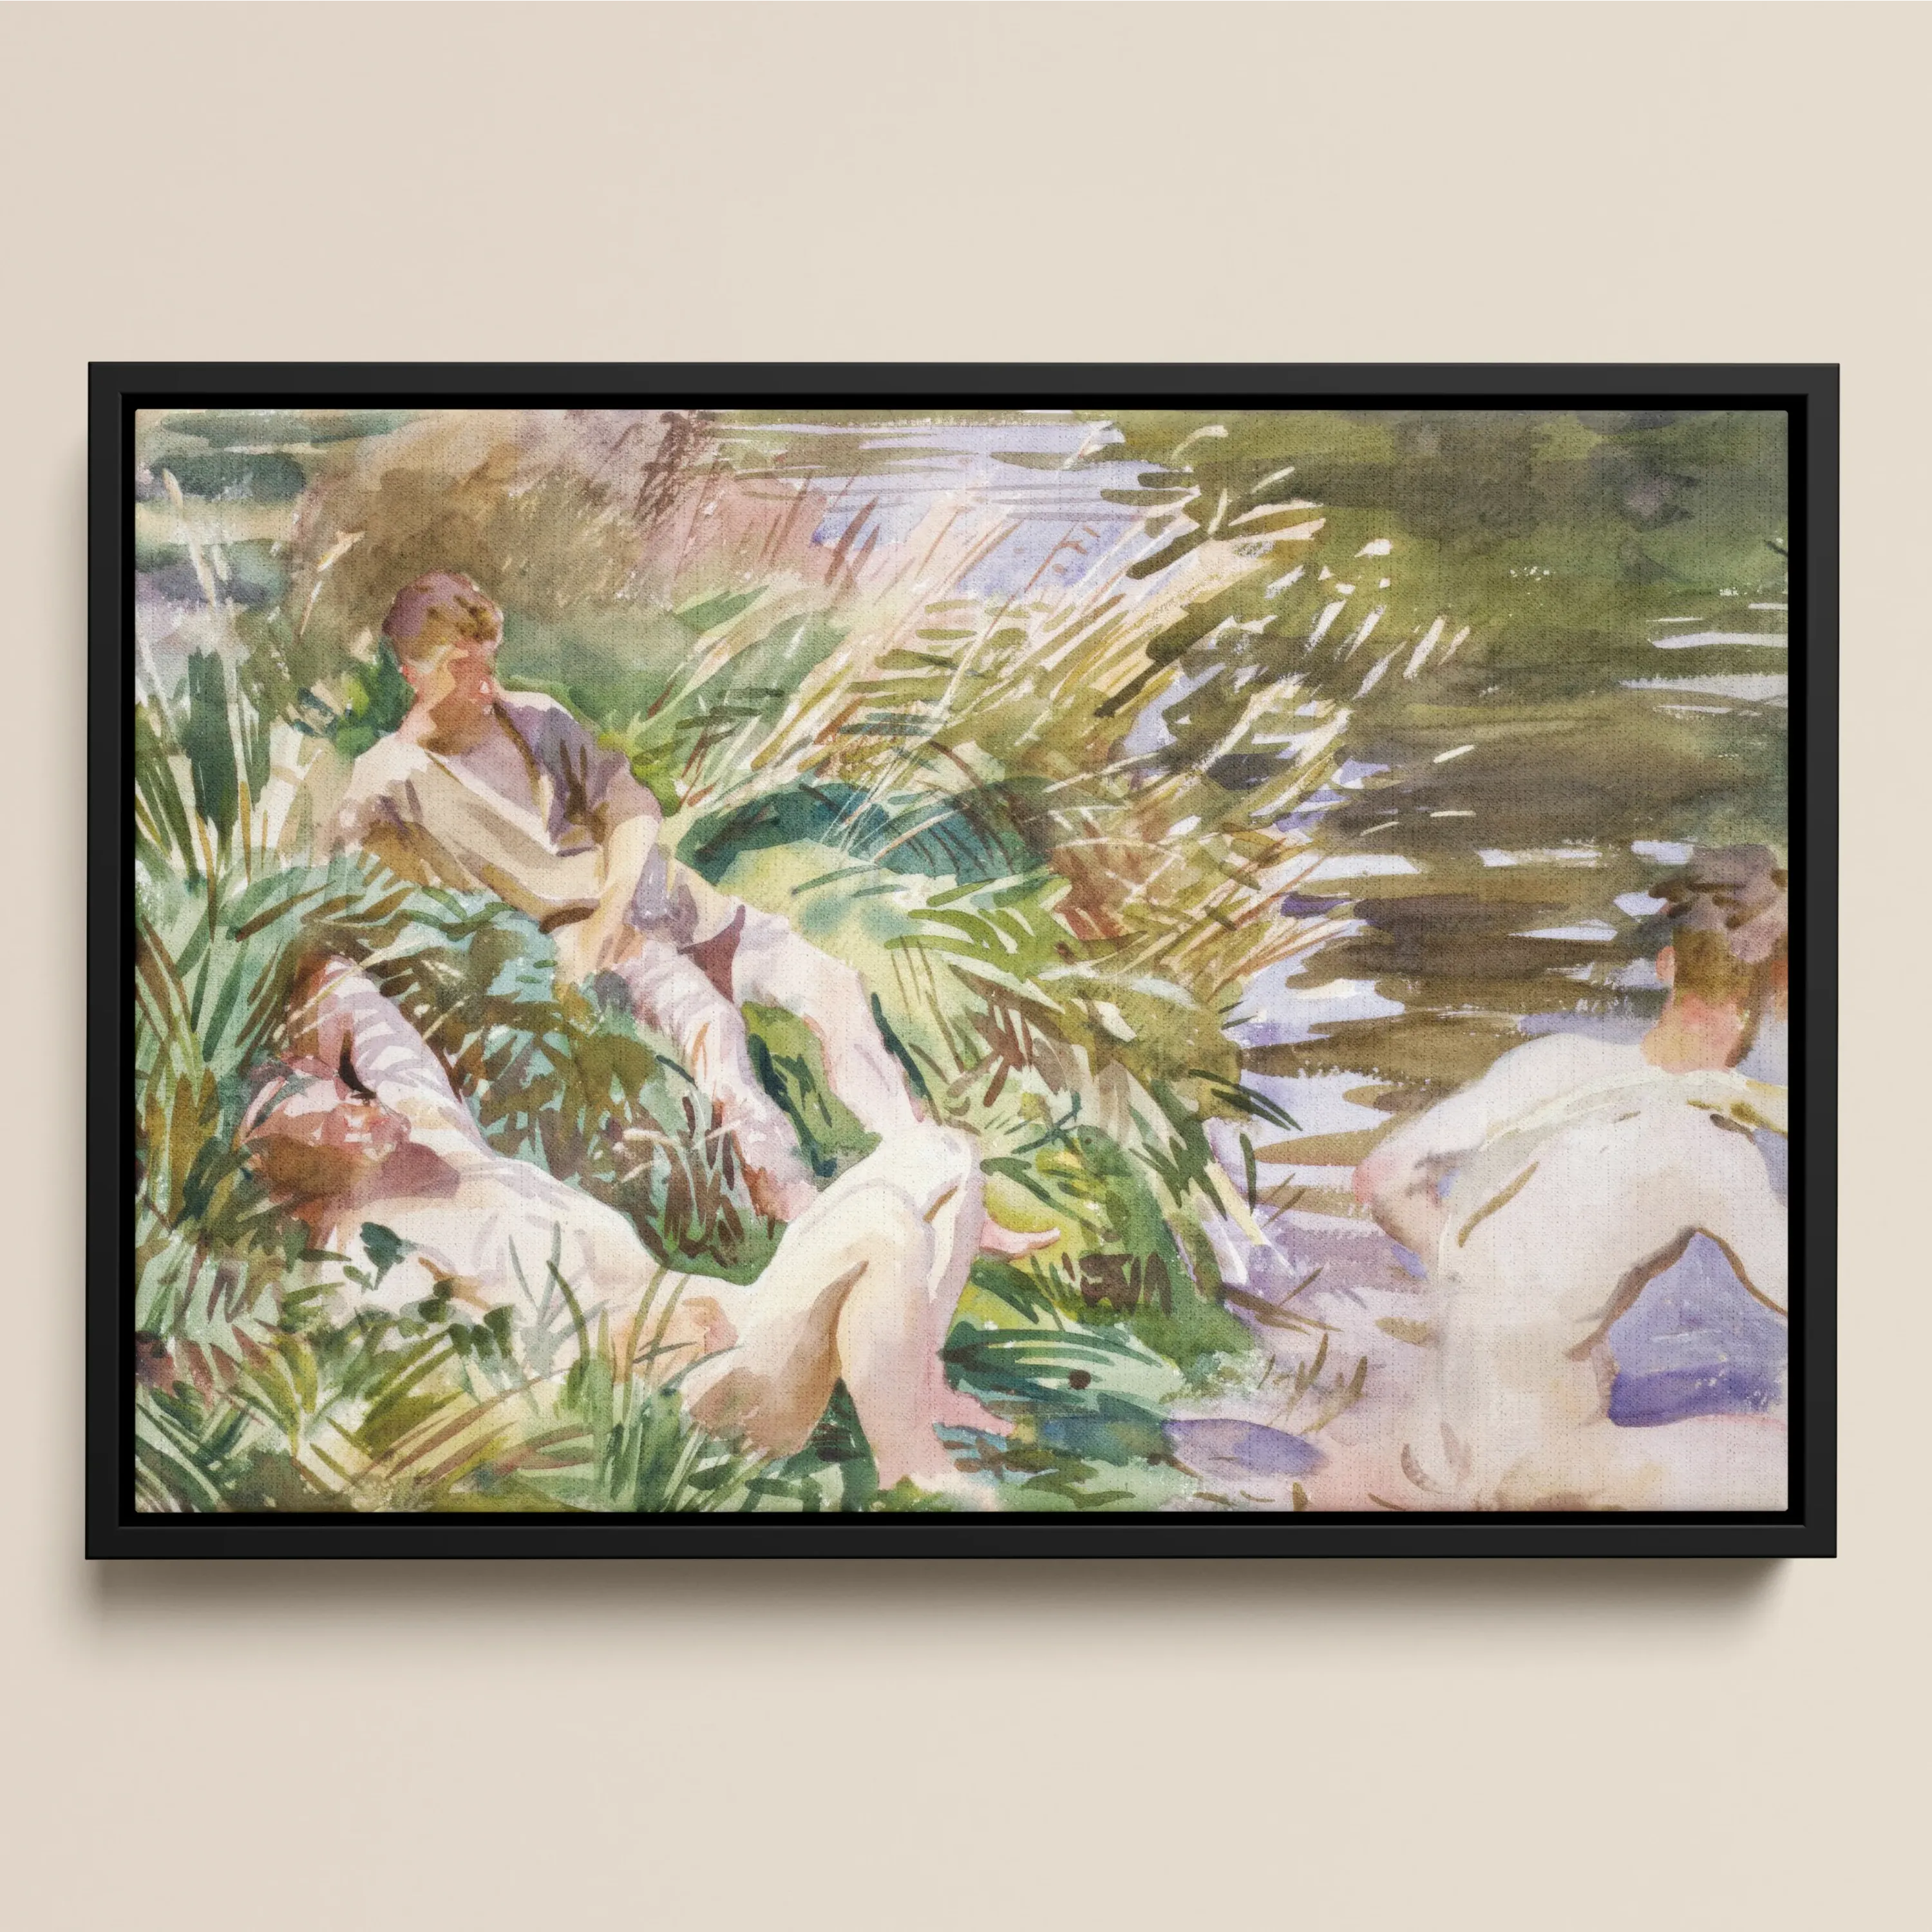 Tommies Bathing - John Singer Sargent Nude Gay Framed Canvas - Posters Prints & Visual Artwork - Aesthetic Art